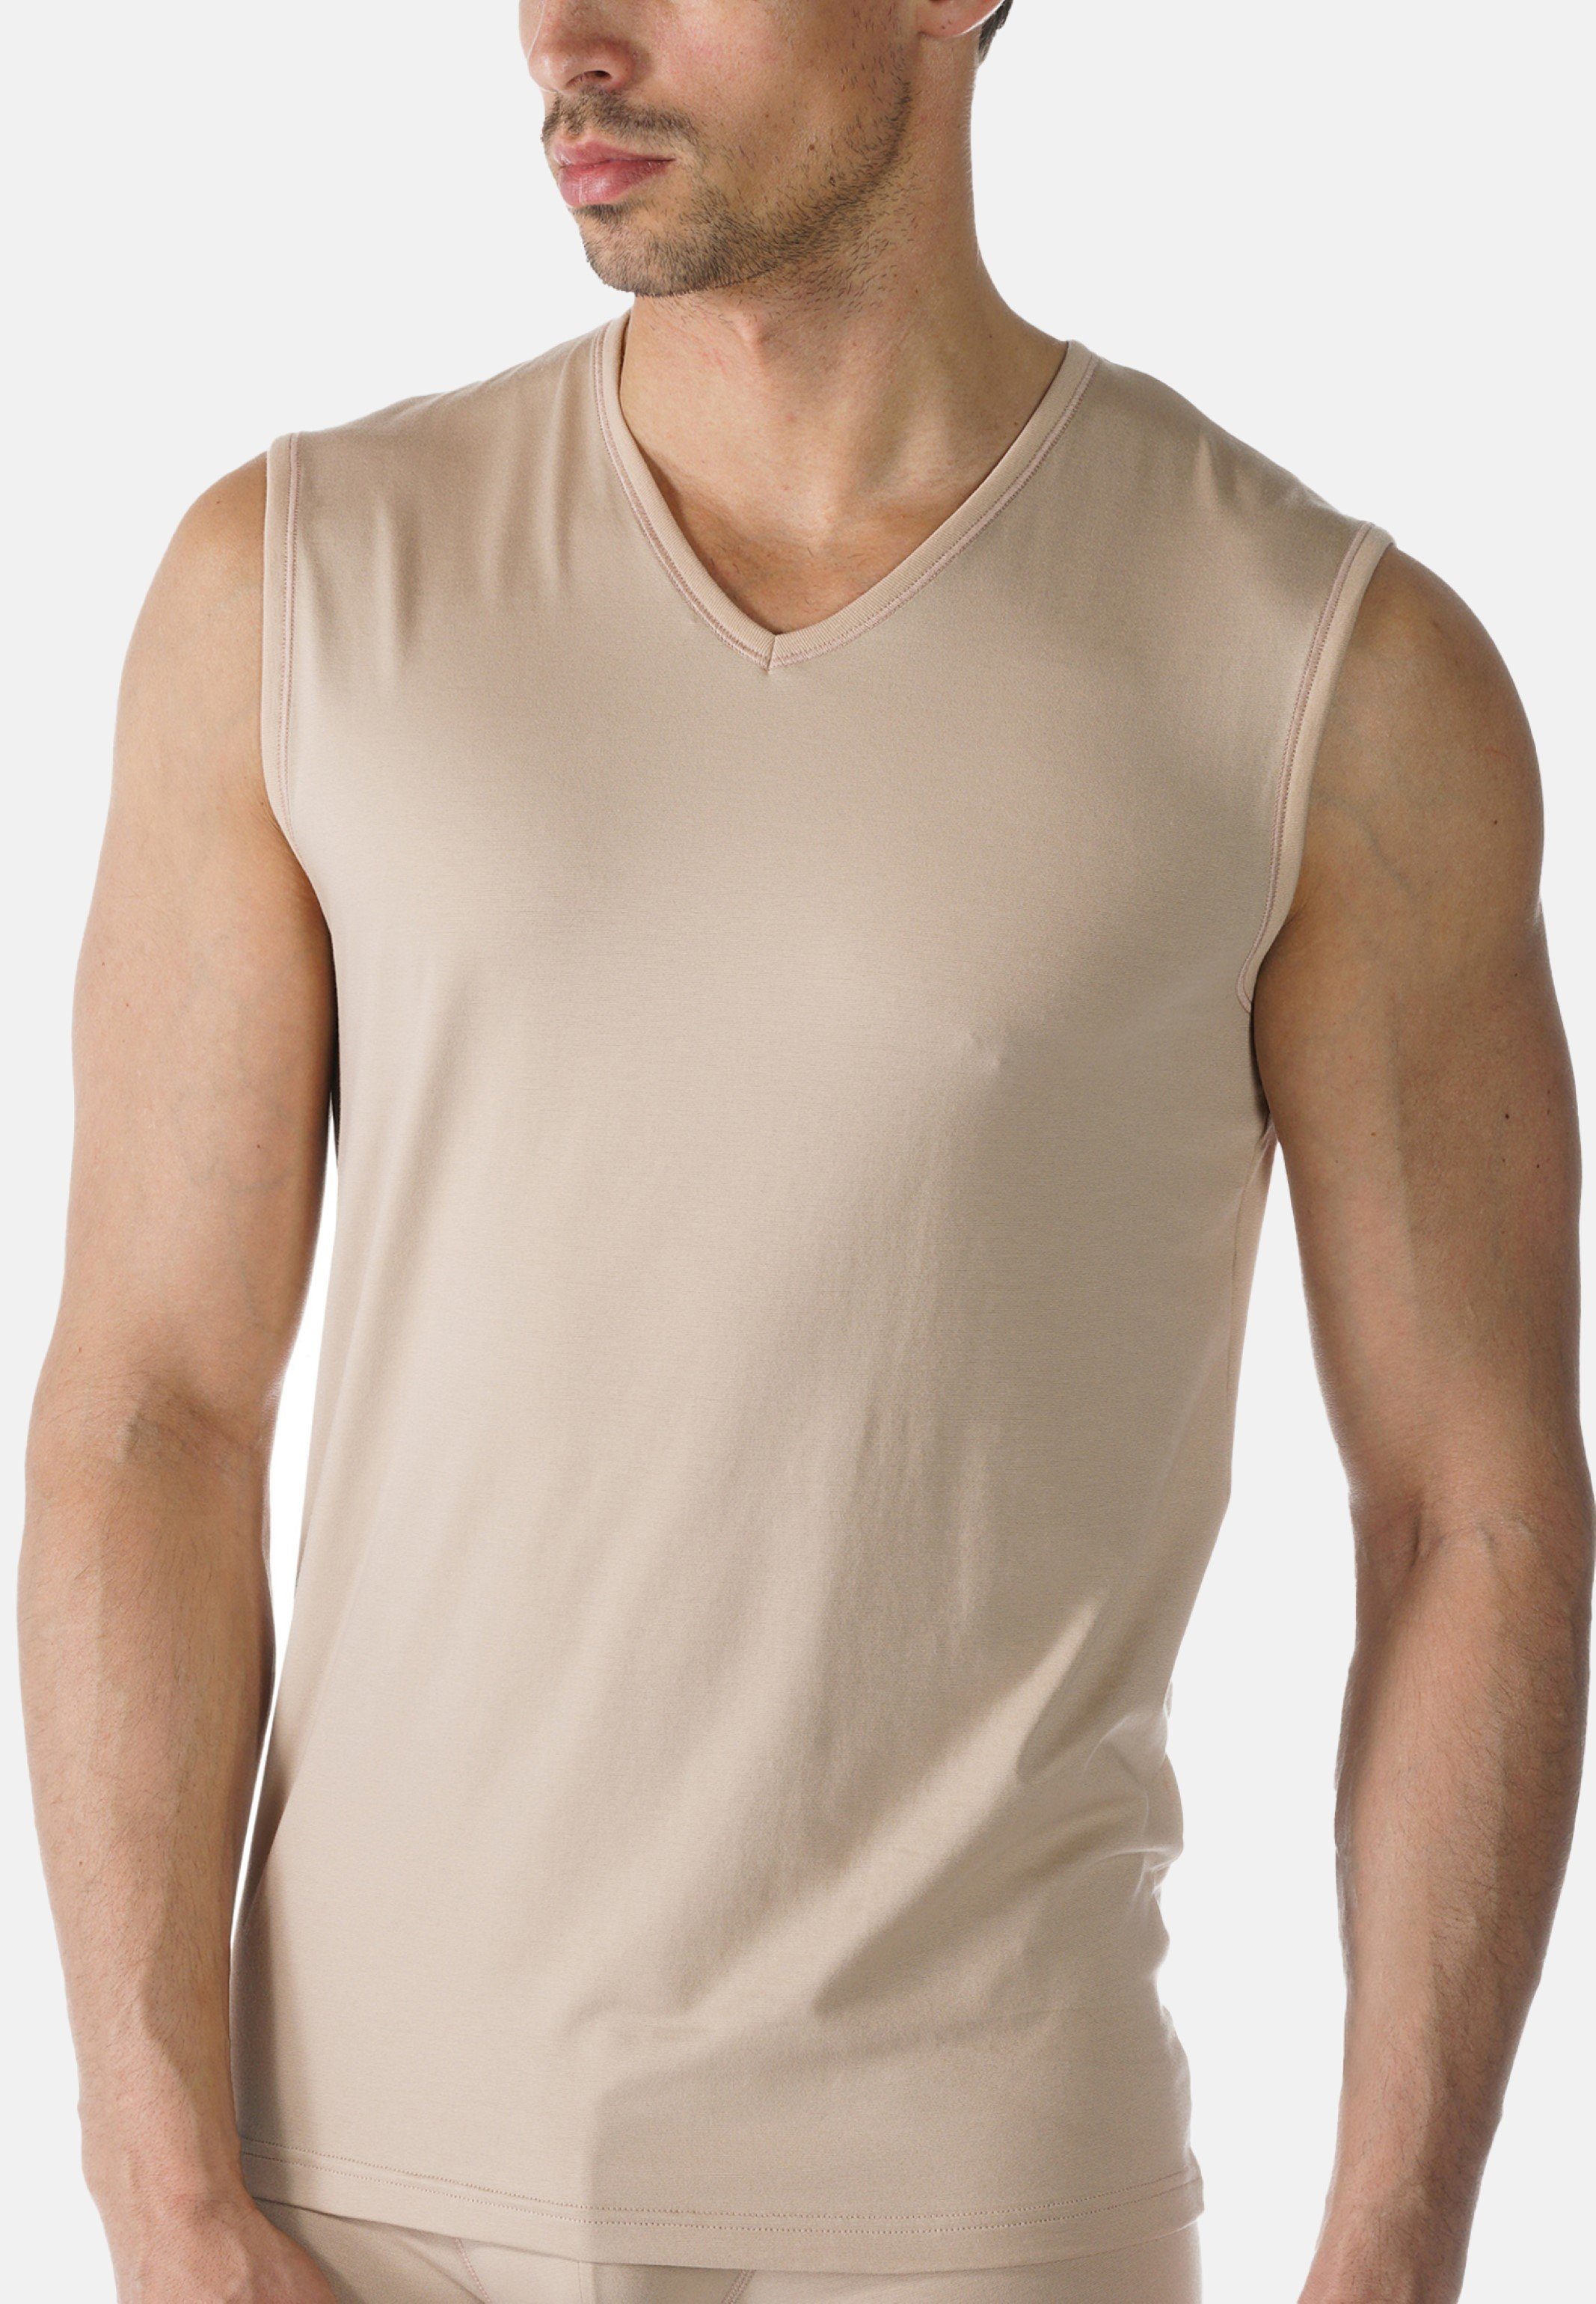 Wäsche/Bademode Unterhemden Mey Unterhemd 2er Pack Dry Cotton (2 Stück), Muskel Shirt - Unterhemd - Baumwolle - Körpernahe Passf